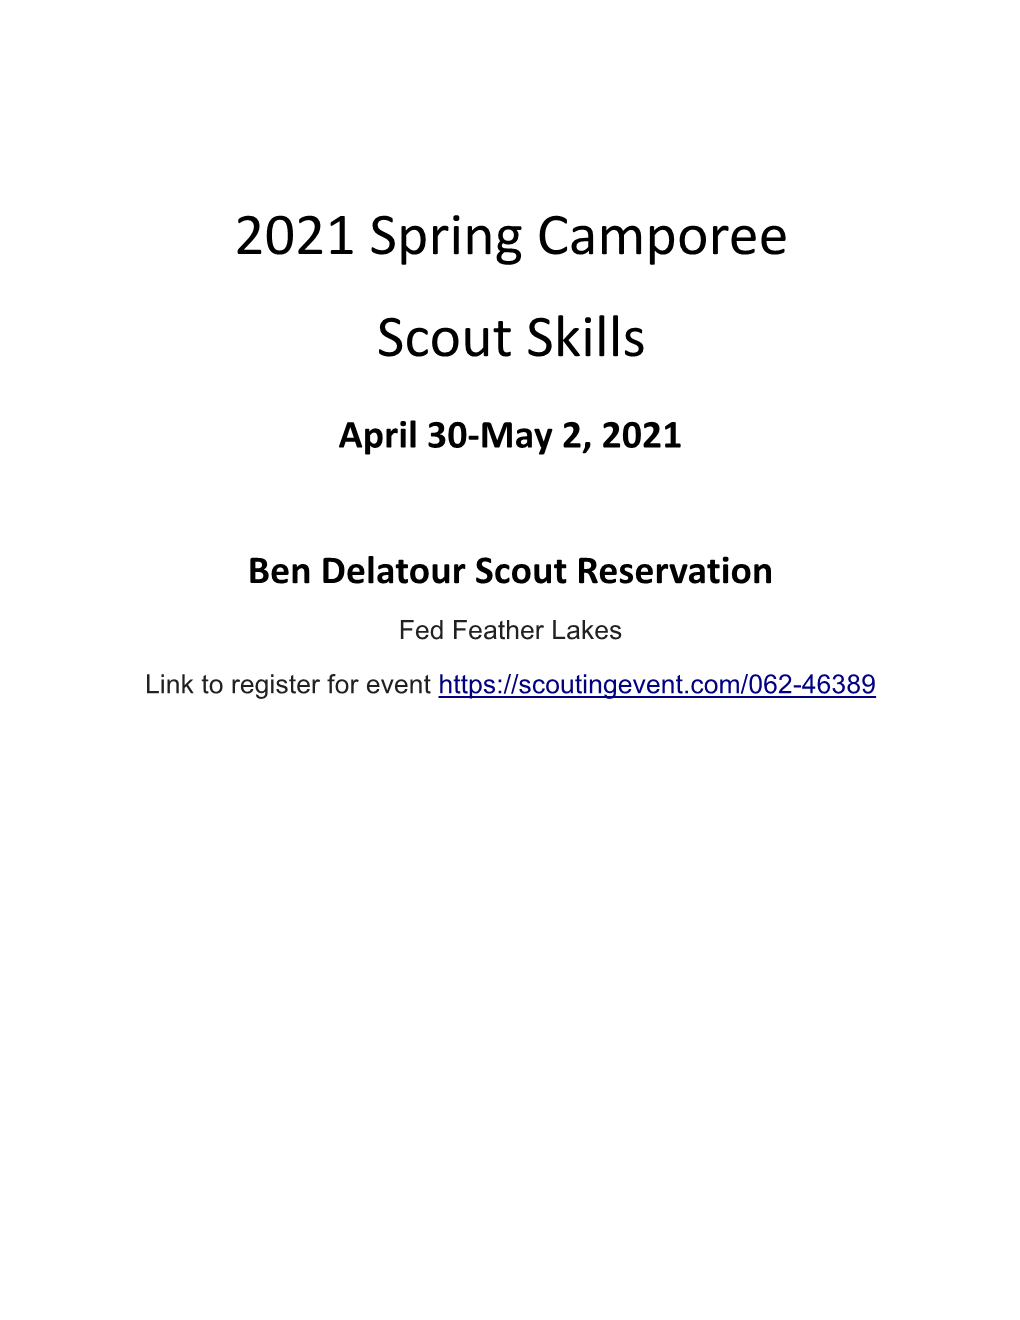 2021 Spring Camporee Scout Skills